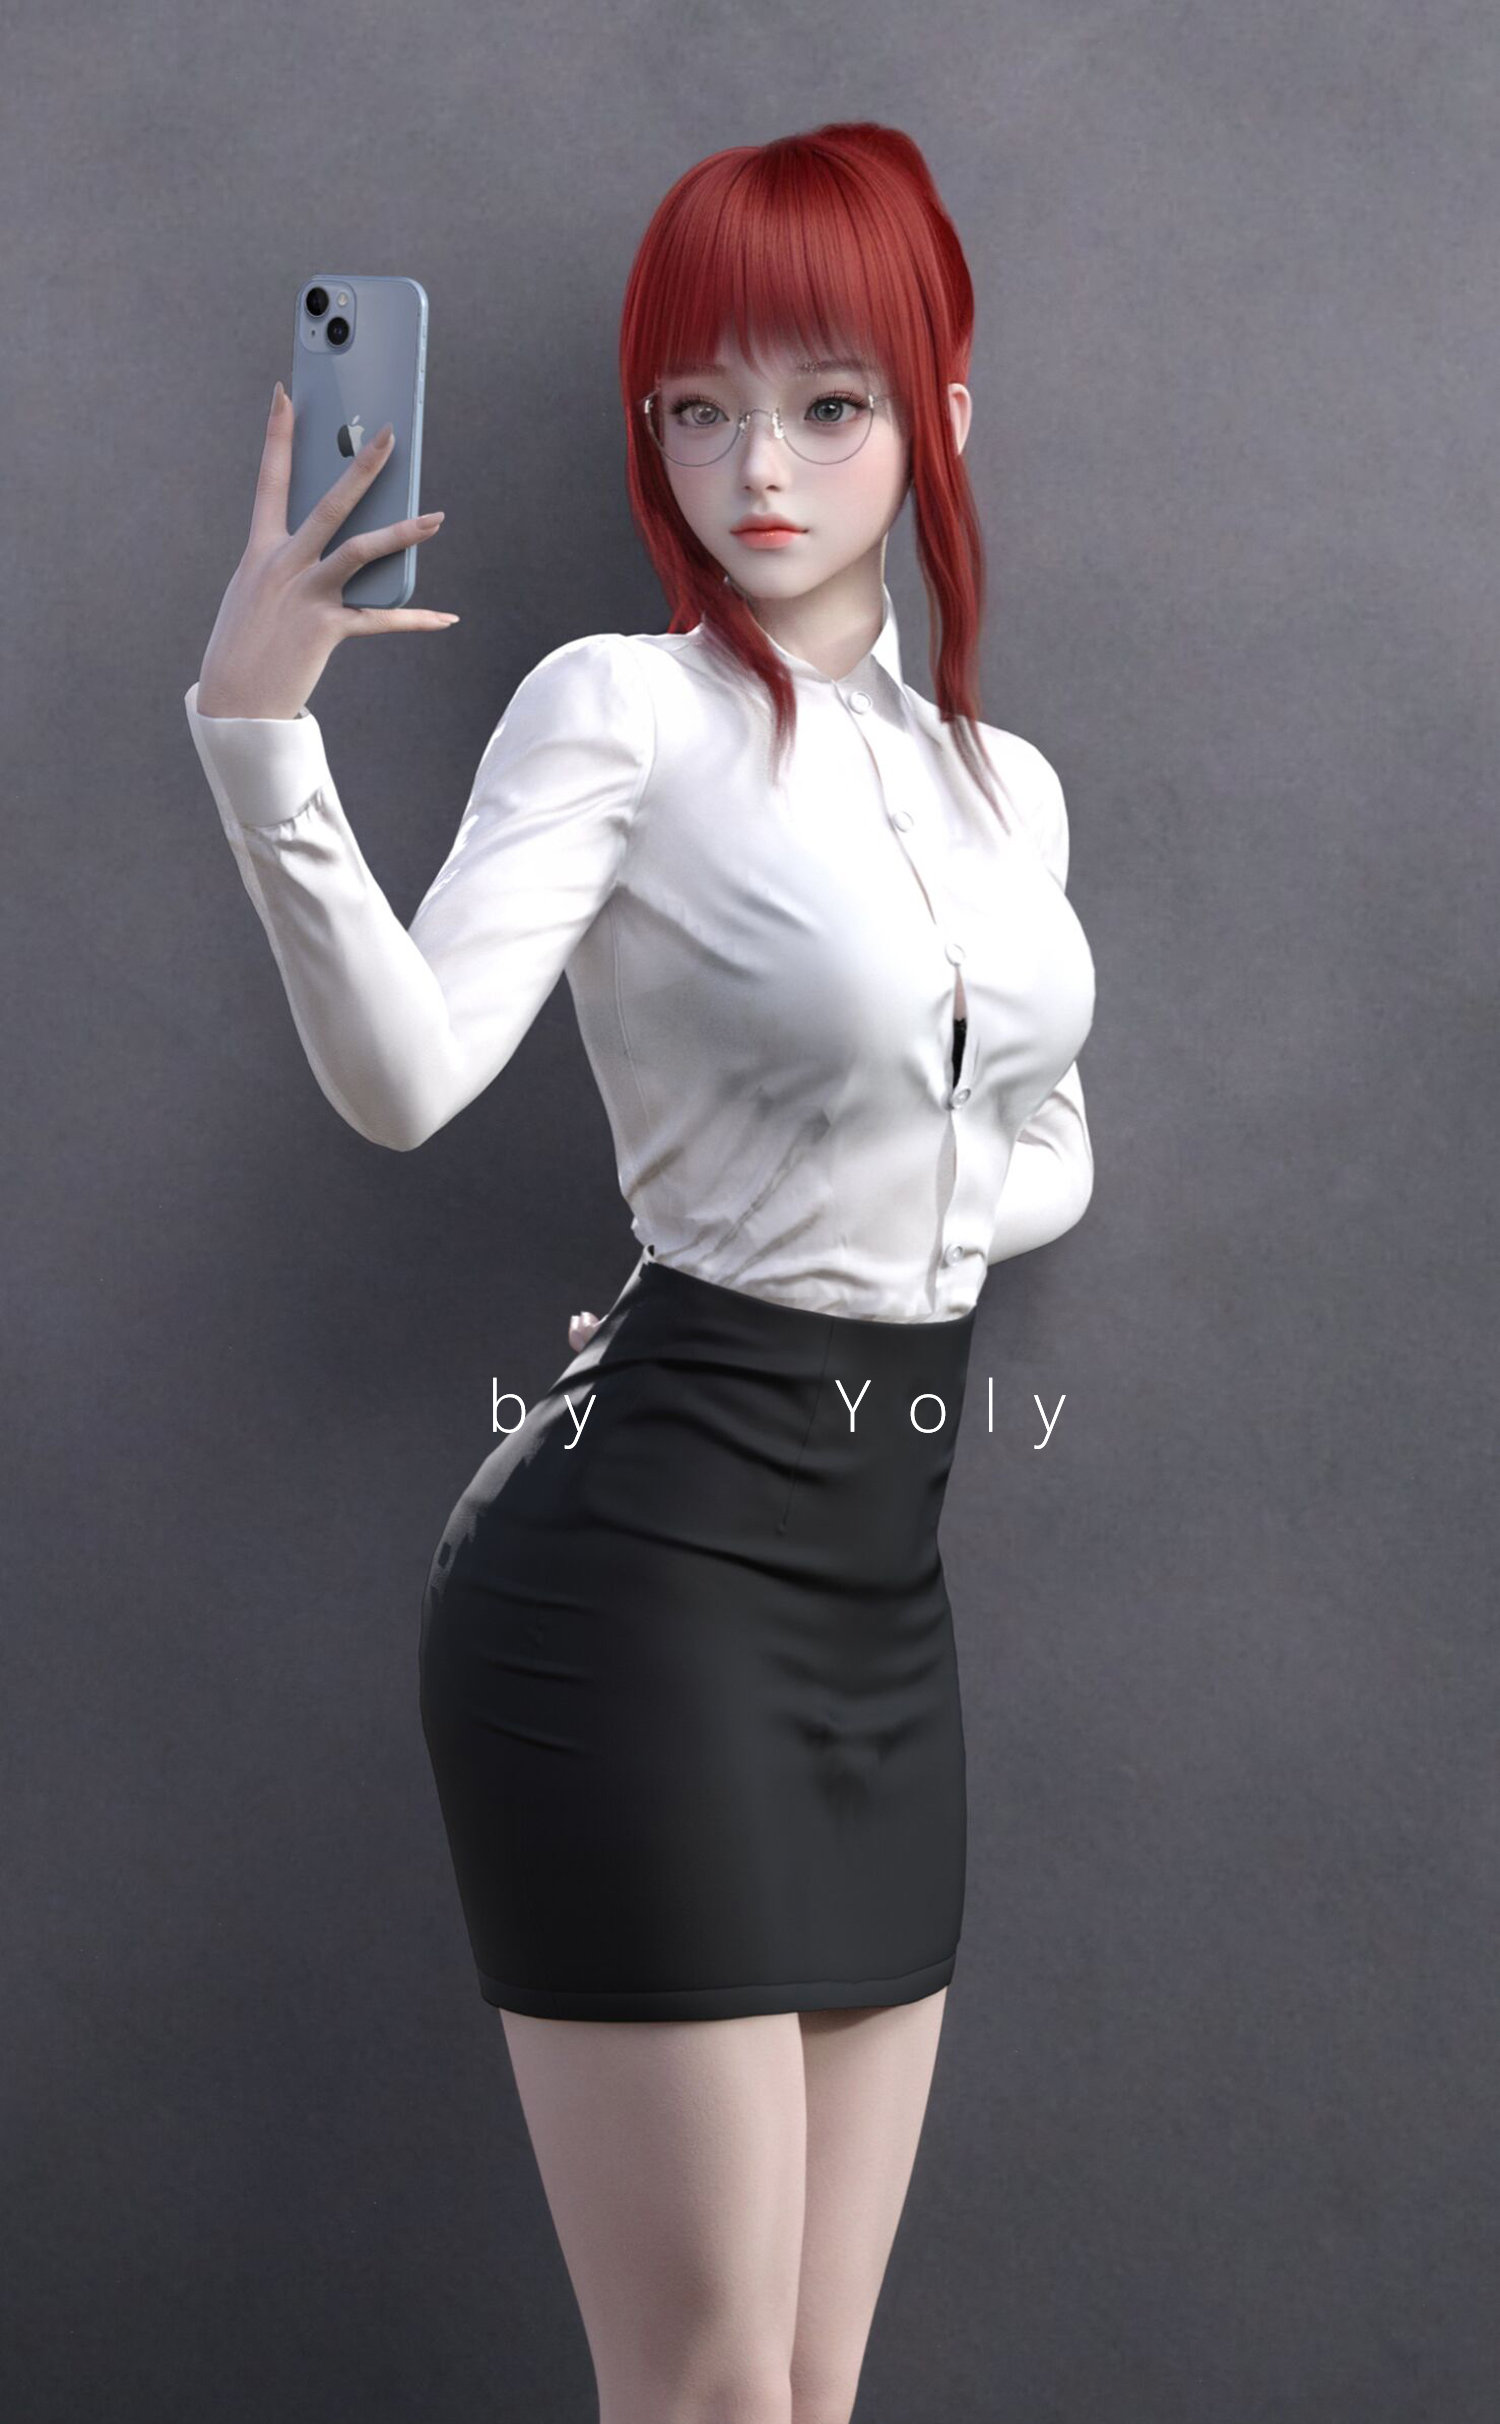 Yoly DAZ Daz 3D CGi Digital Art Artwork Asian Asian Cosplayer Fan Art Women School Uniform Schoolgir 1500x2424